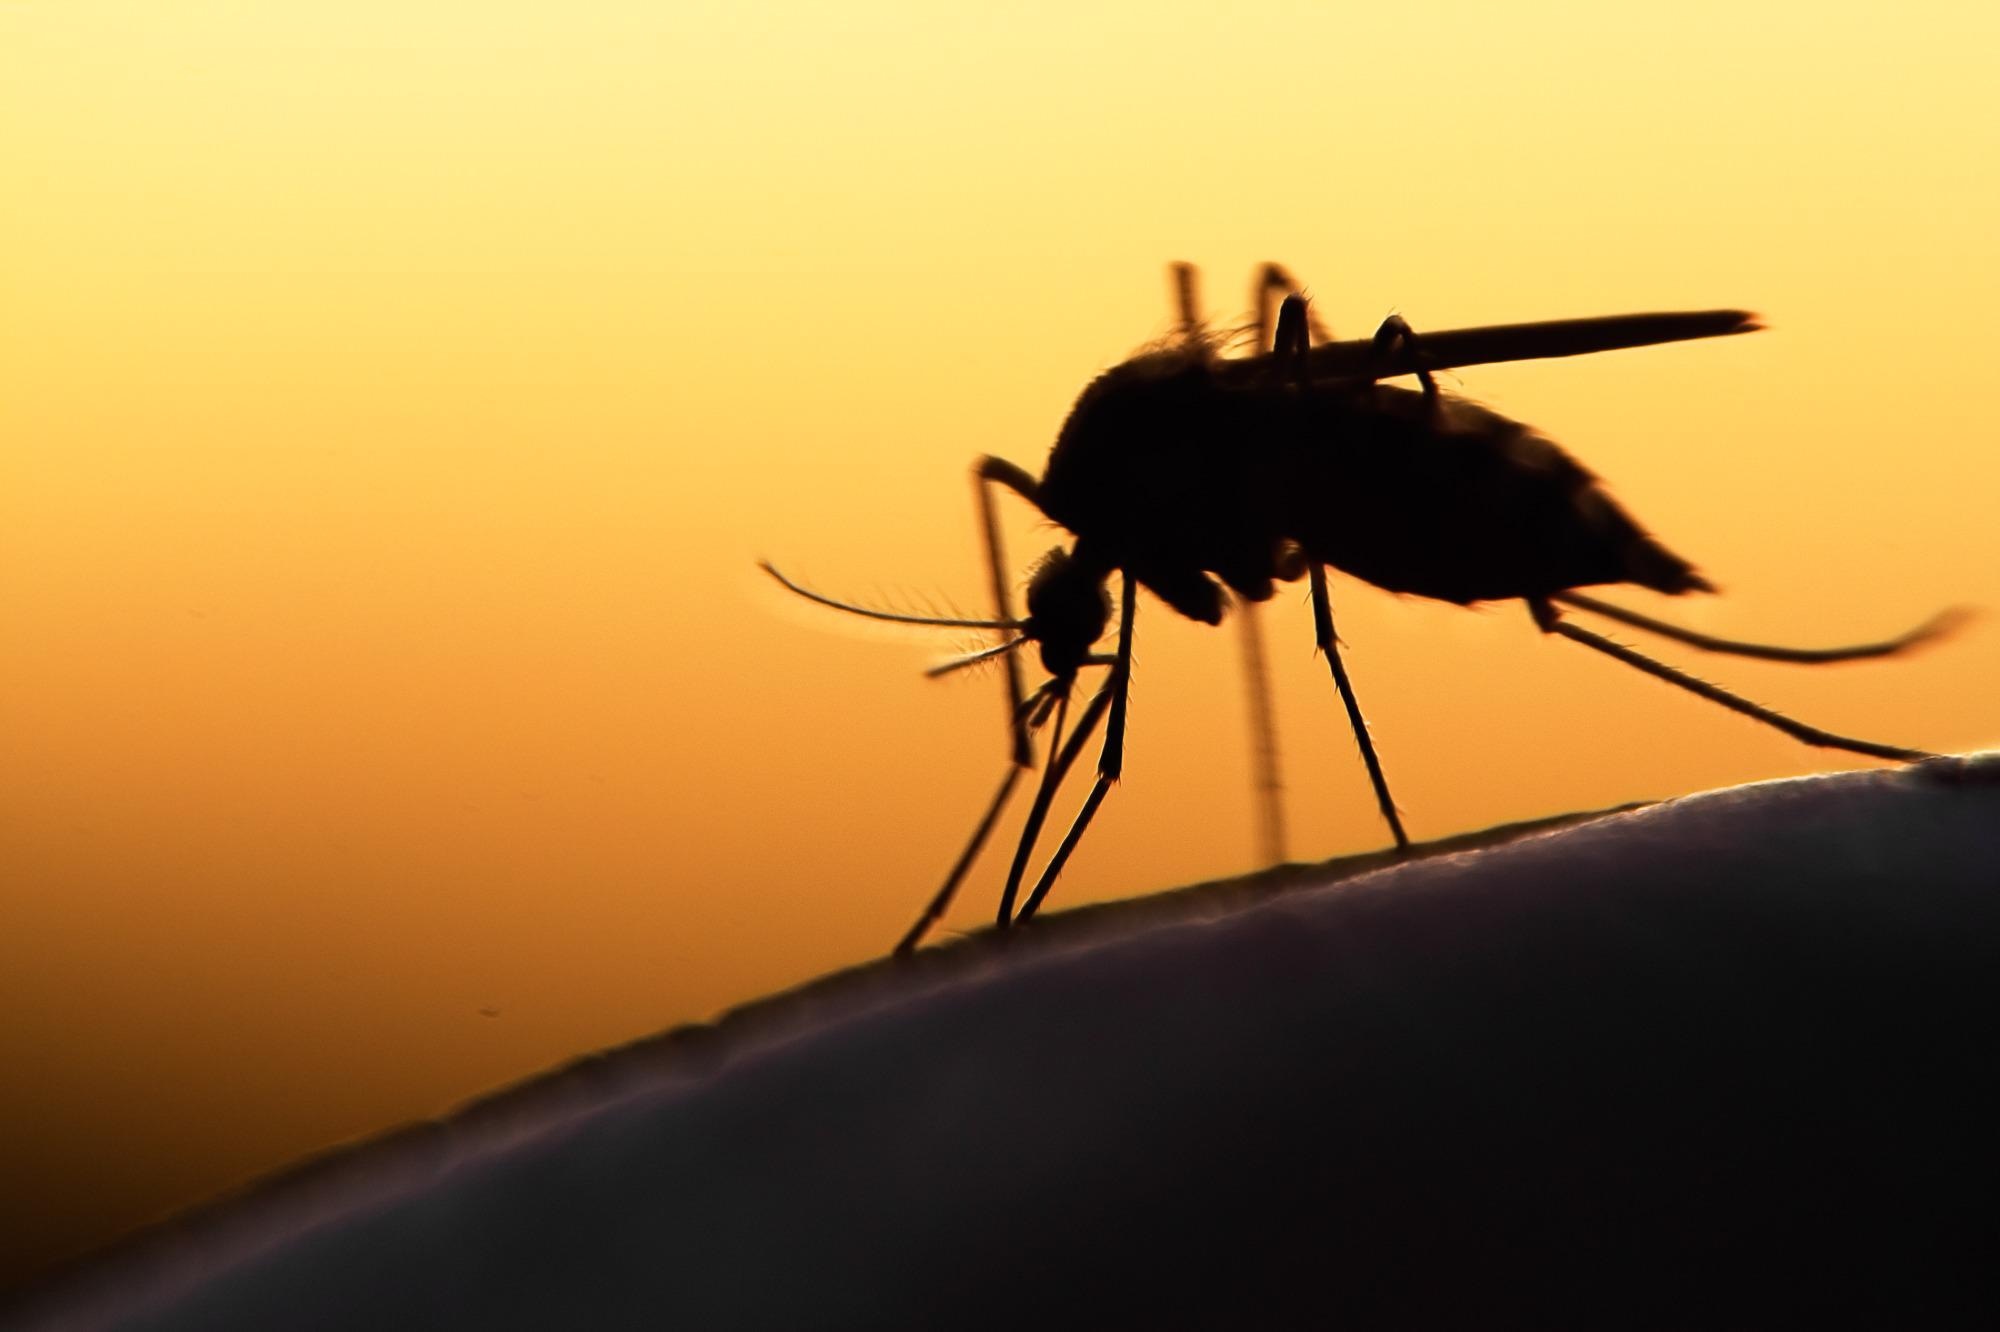 Mosquito-borne diseases include malaria, dengue, West Nile virus, Chikungunya, yellow fever, and Zika. Image Credit: mycteria / Shutterstock